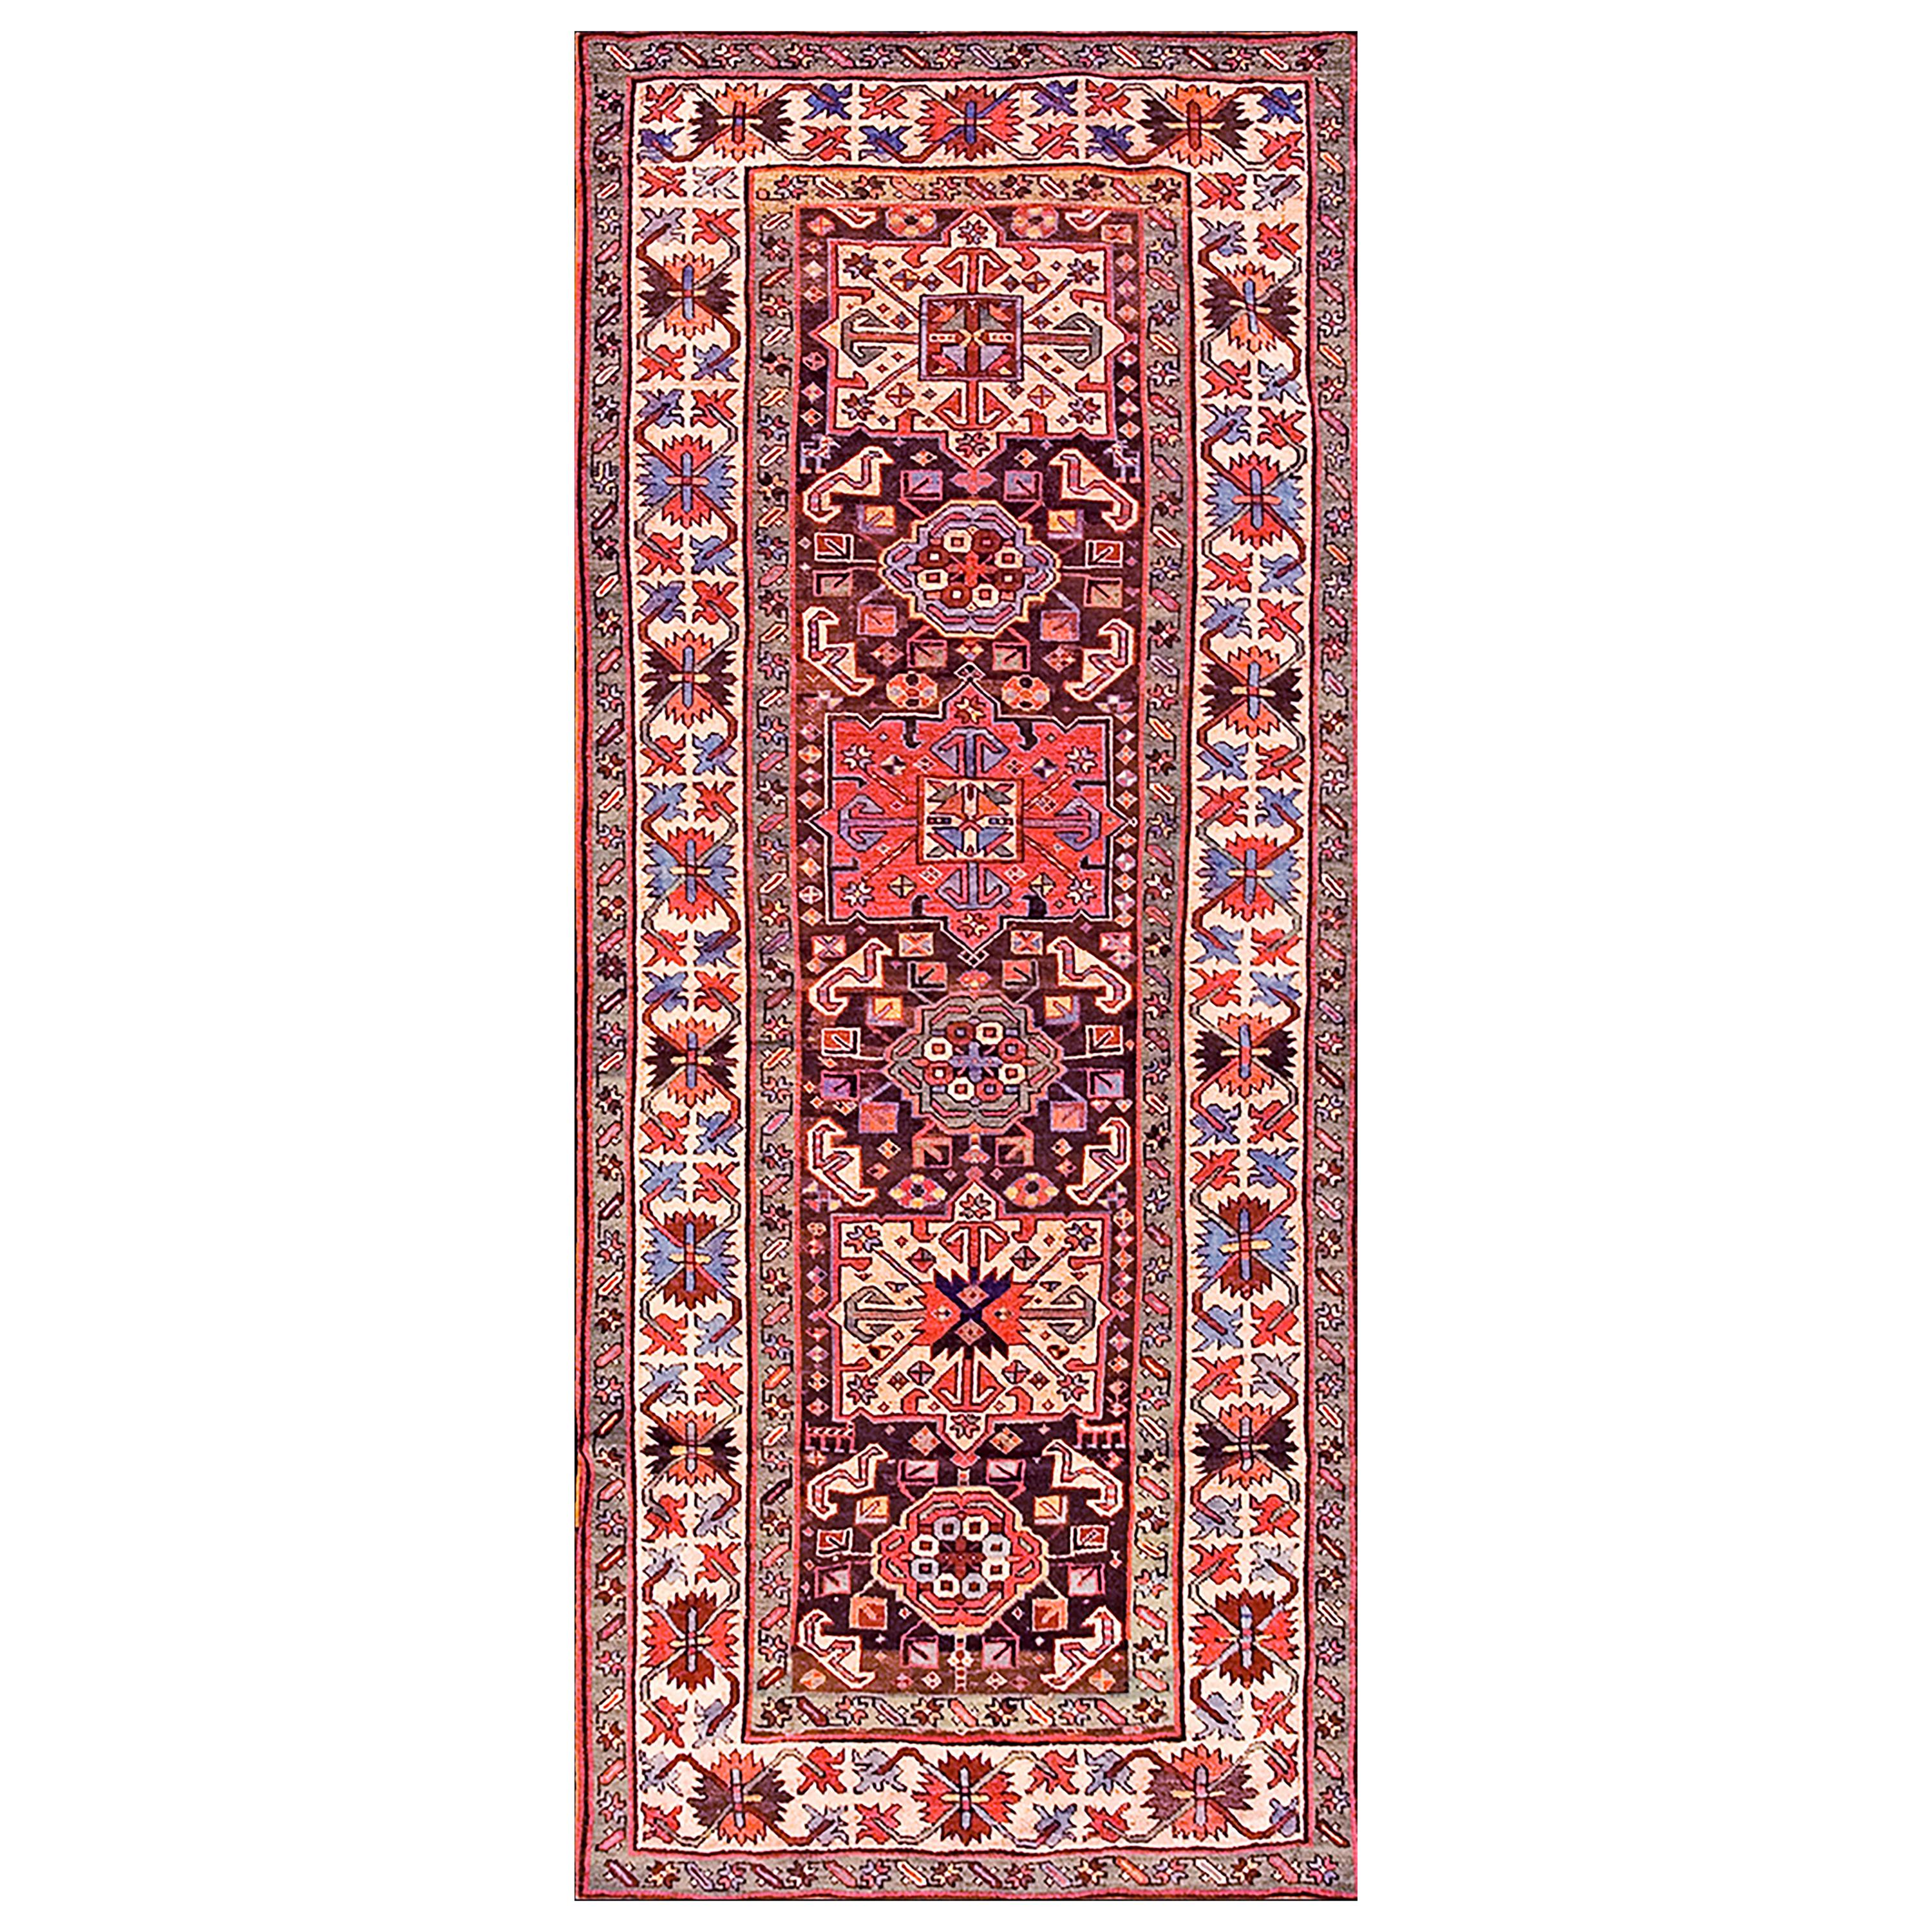 19th Century Caucasian Kazak Carpet ( 3'6" x 9'2" - 107 x 279 ) For Sale